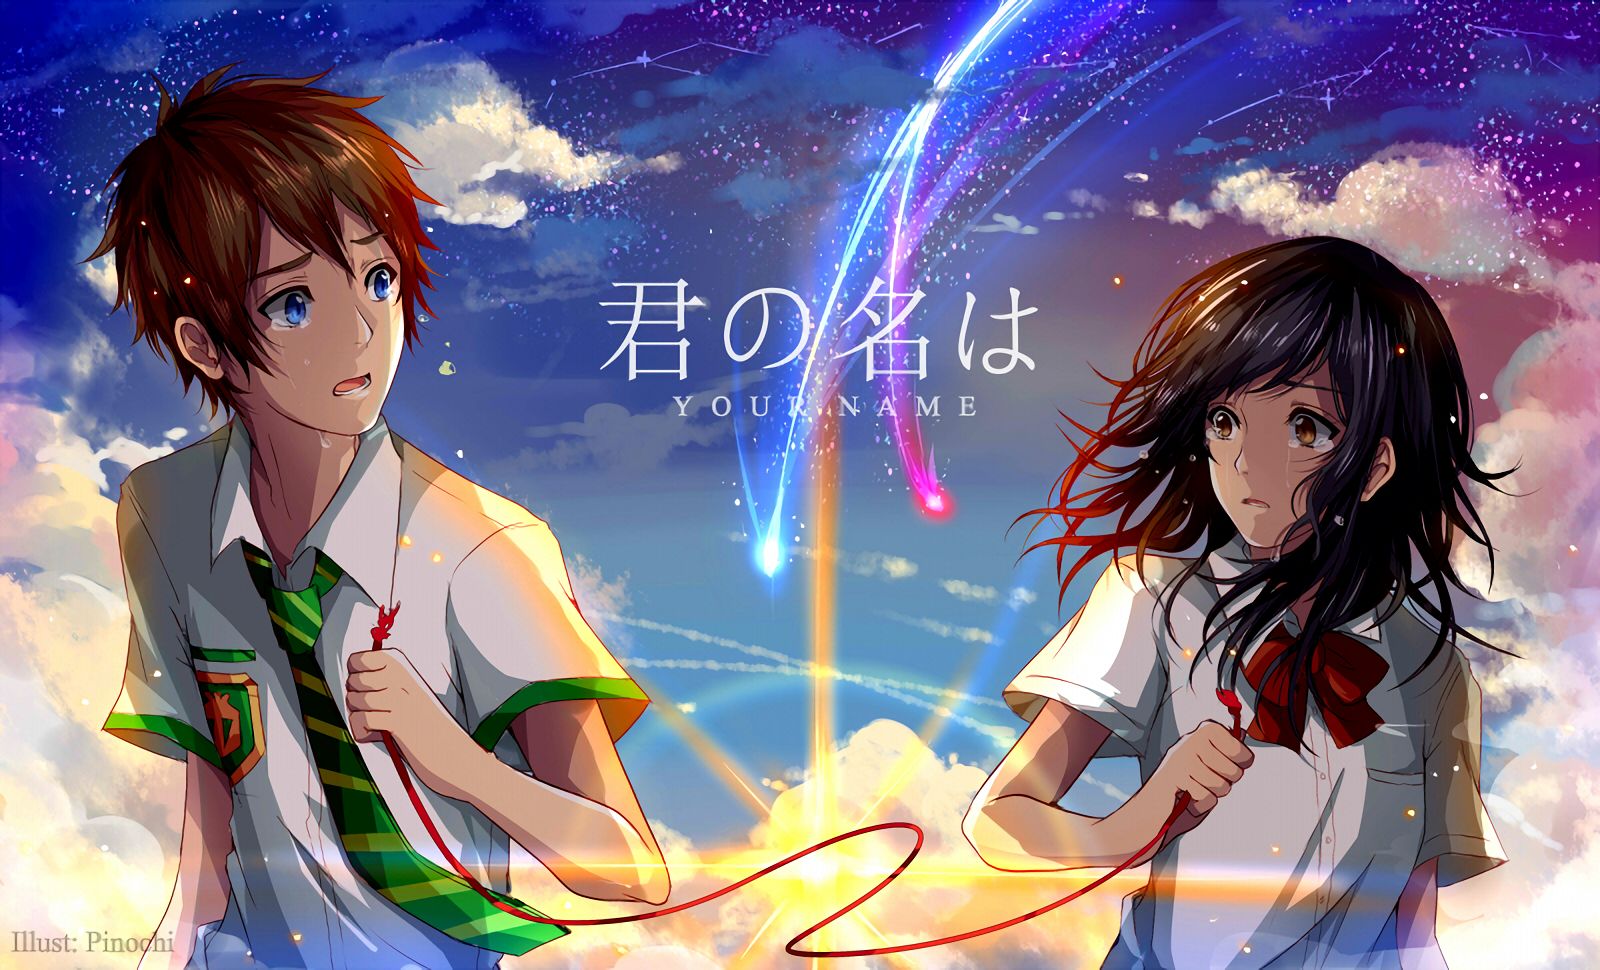 Baixe gratuitamente a imagem Anime, Your Name, Kimi No Na Wa, Mitsuha Miyamizu, Taki Tachibana na área de trabalho do seu PC